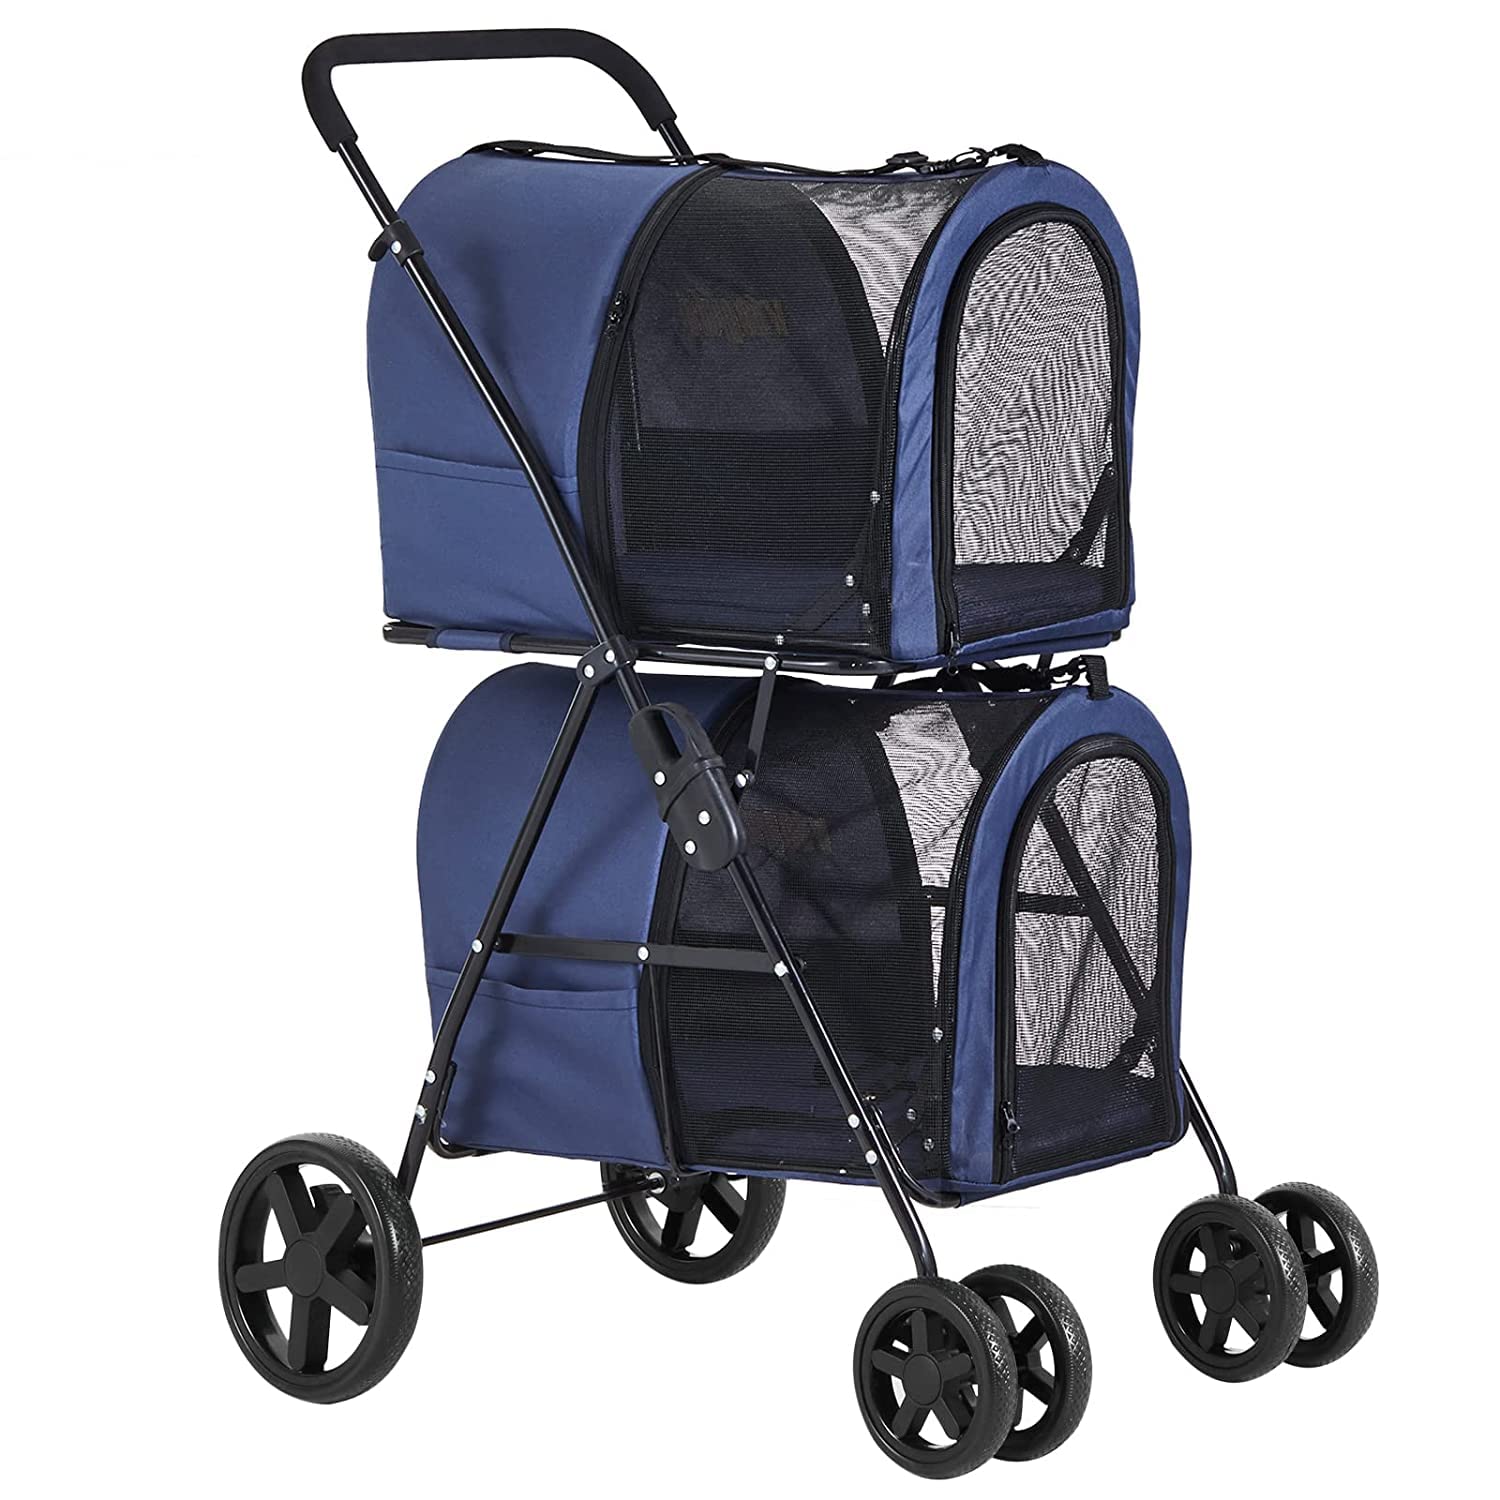 VIAGDO Dog Strollers for Small Medium Dogs, Double Cat Strollers for 2 Cats, 4-in-1 Small Doggy Pet Stroller, 2 Detachable Carri